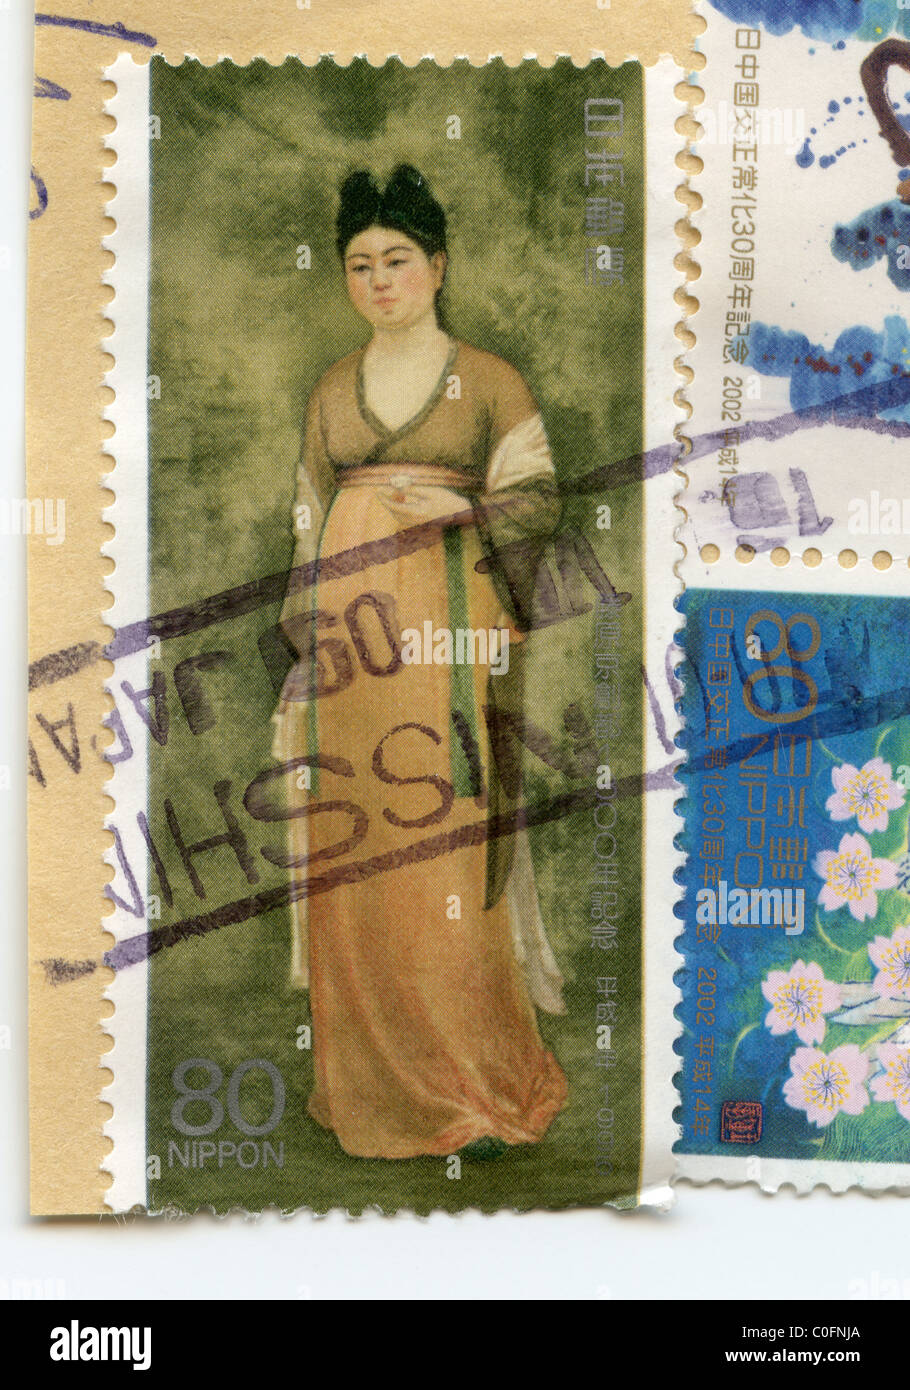 Japan postage stamp Stock Photo